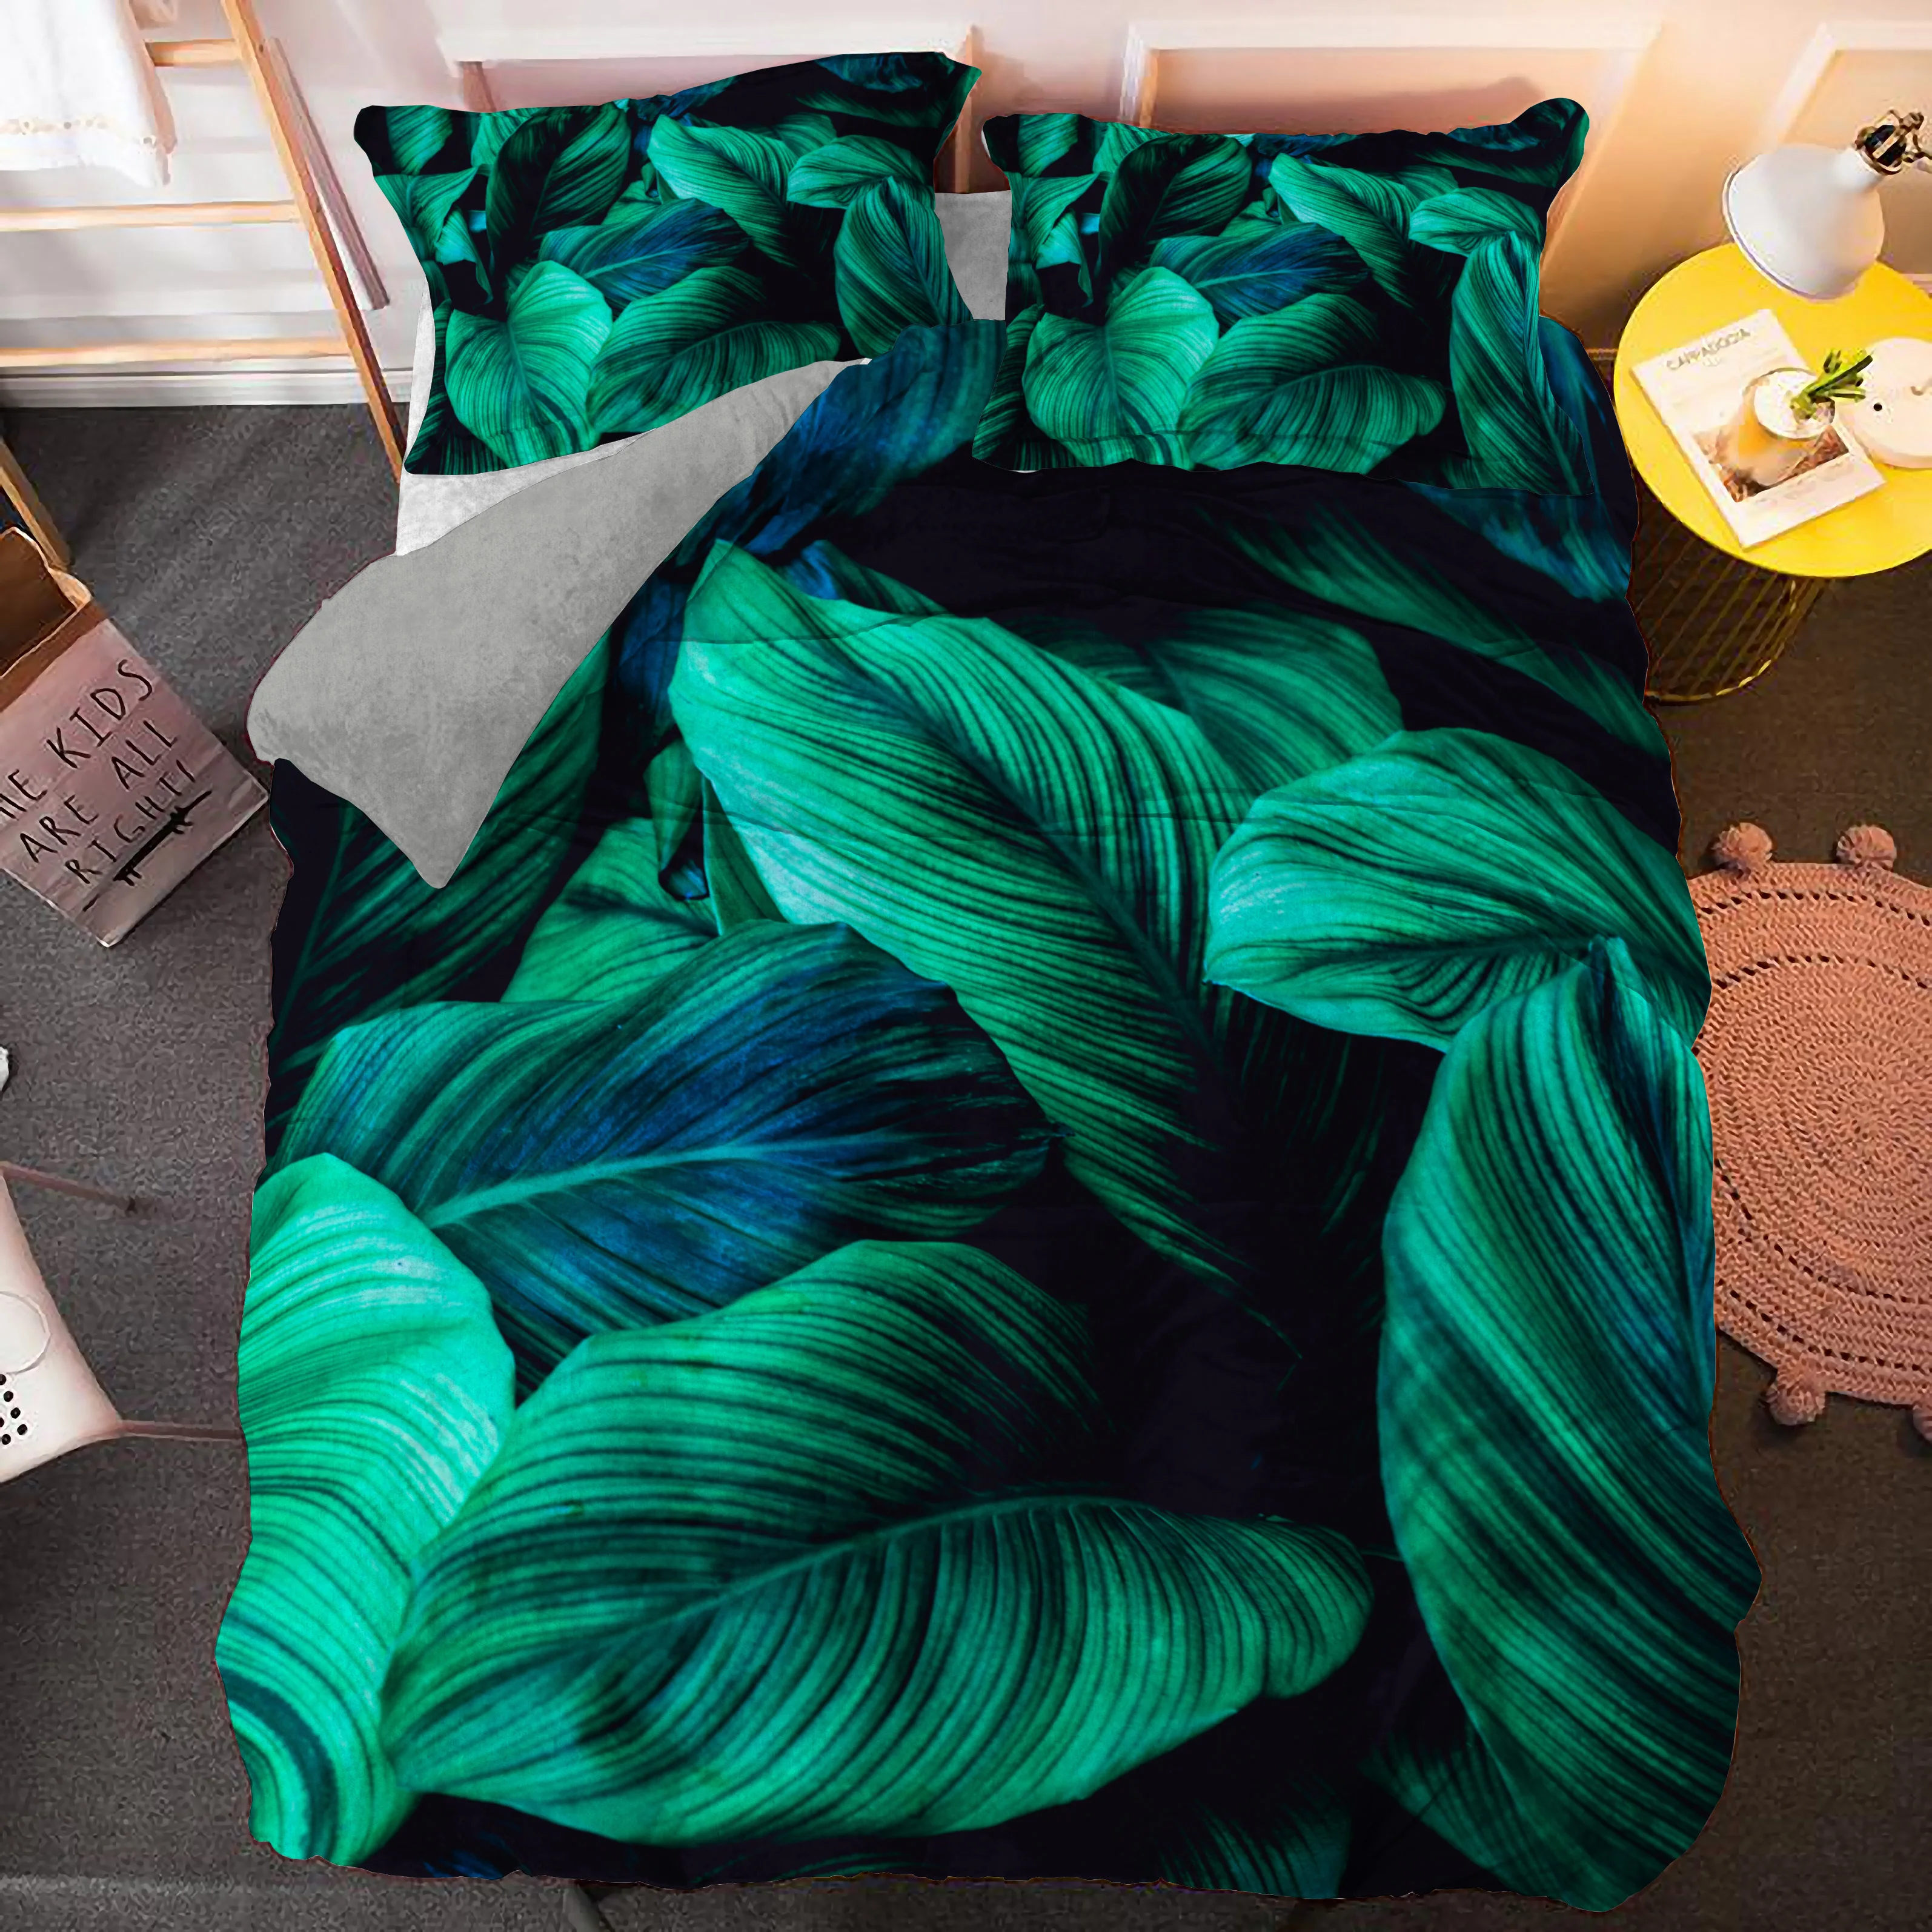 Home Textile King Queen Twin Bed Linen Girl Kid Teen Bedding Set Green Leaf Duvet Quilt Cover Pillowcase Flat Beds Sets